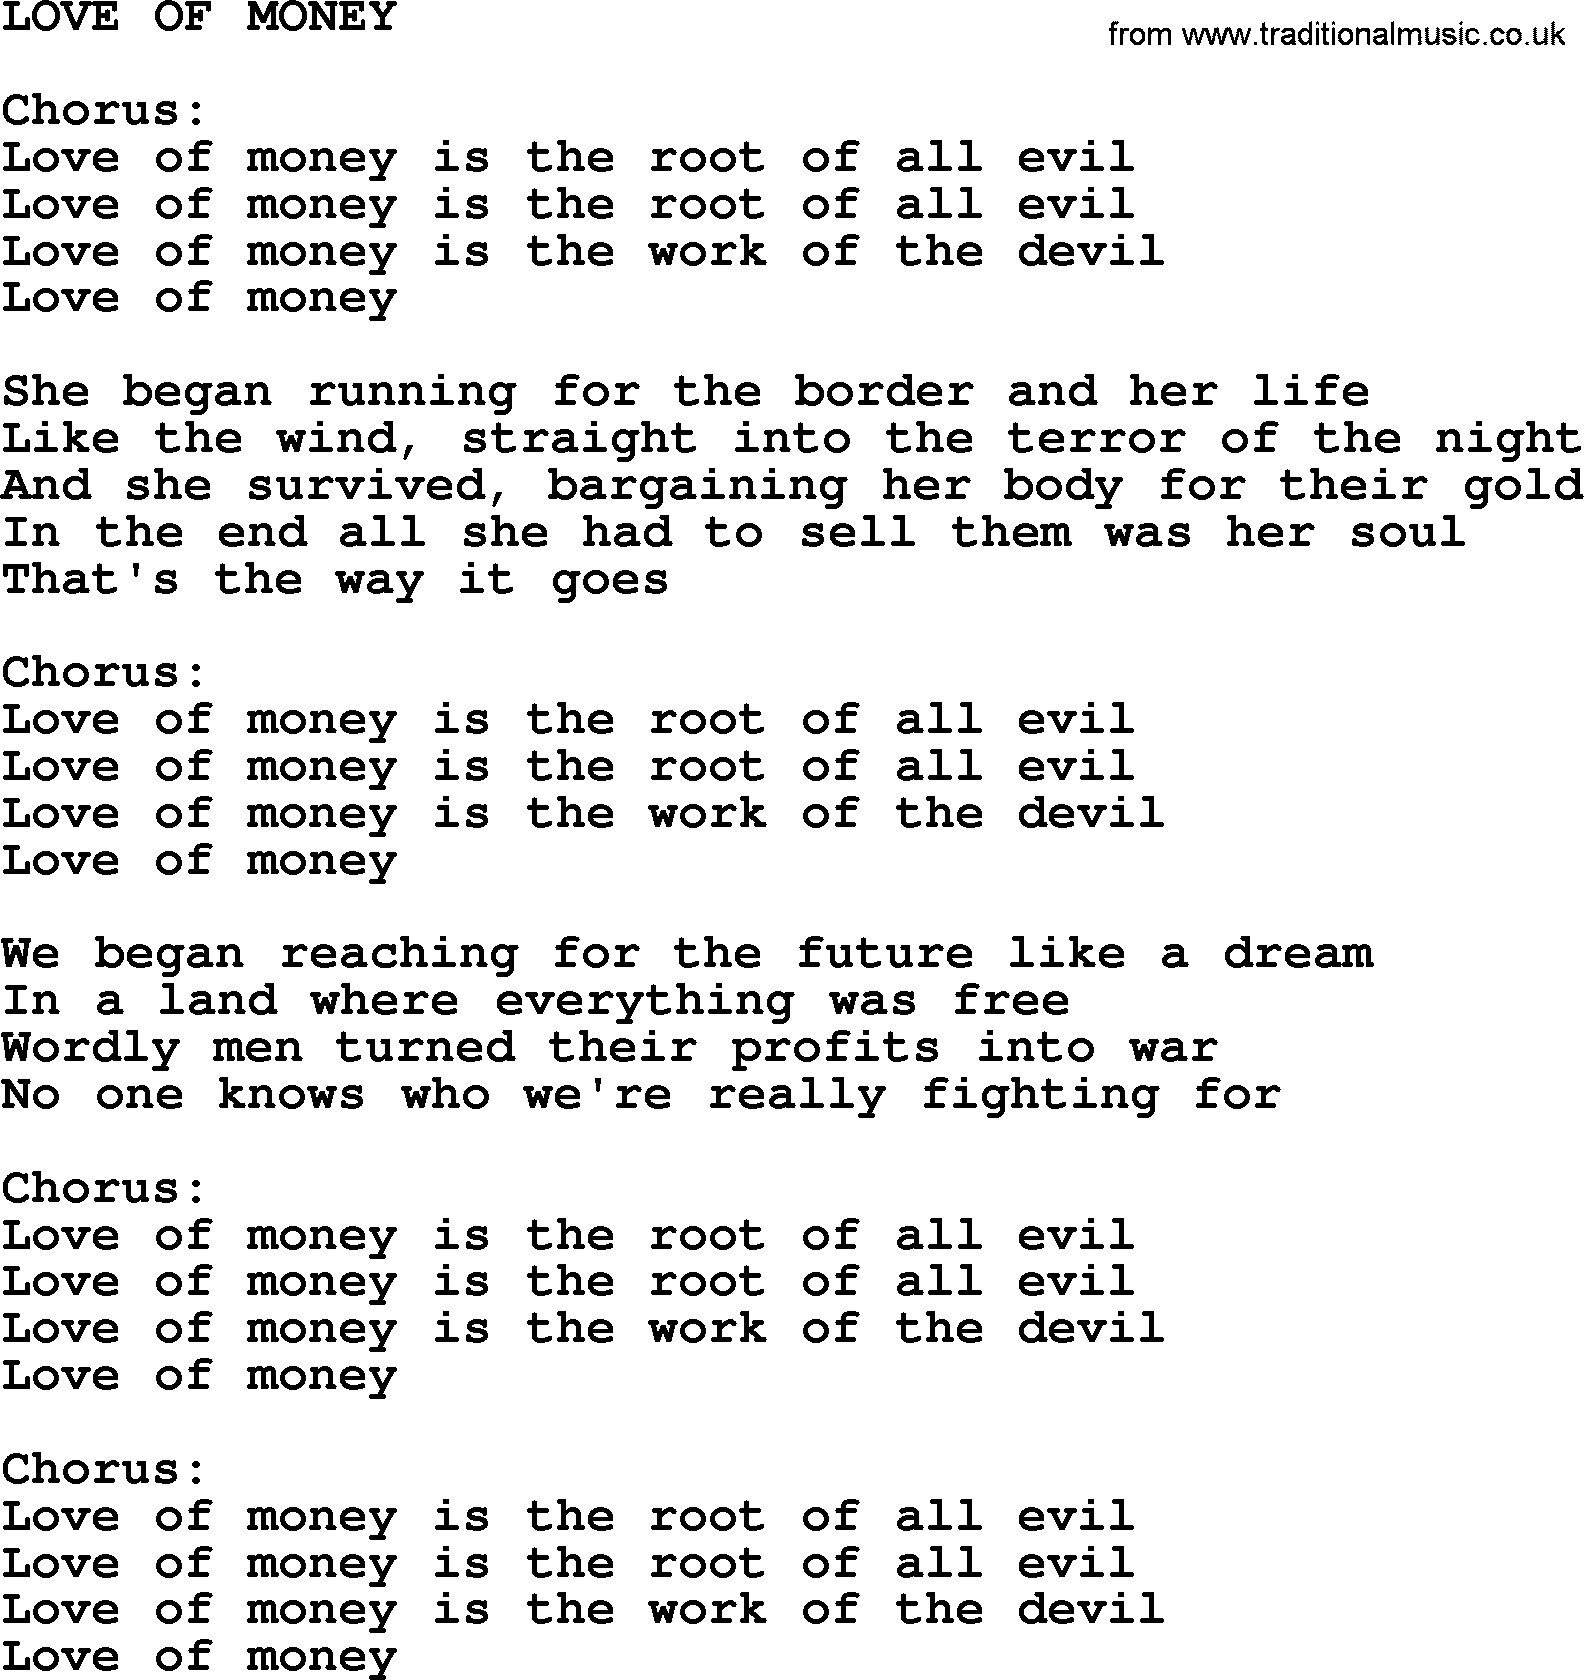 Kris Kristofferson song: Love Of Money lyrics